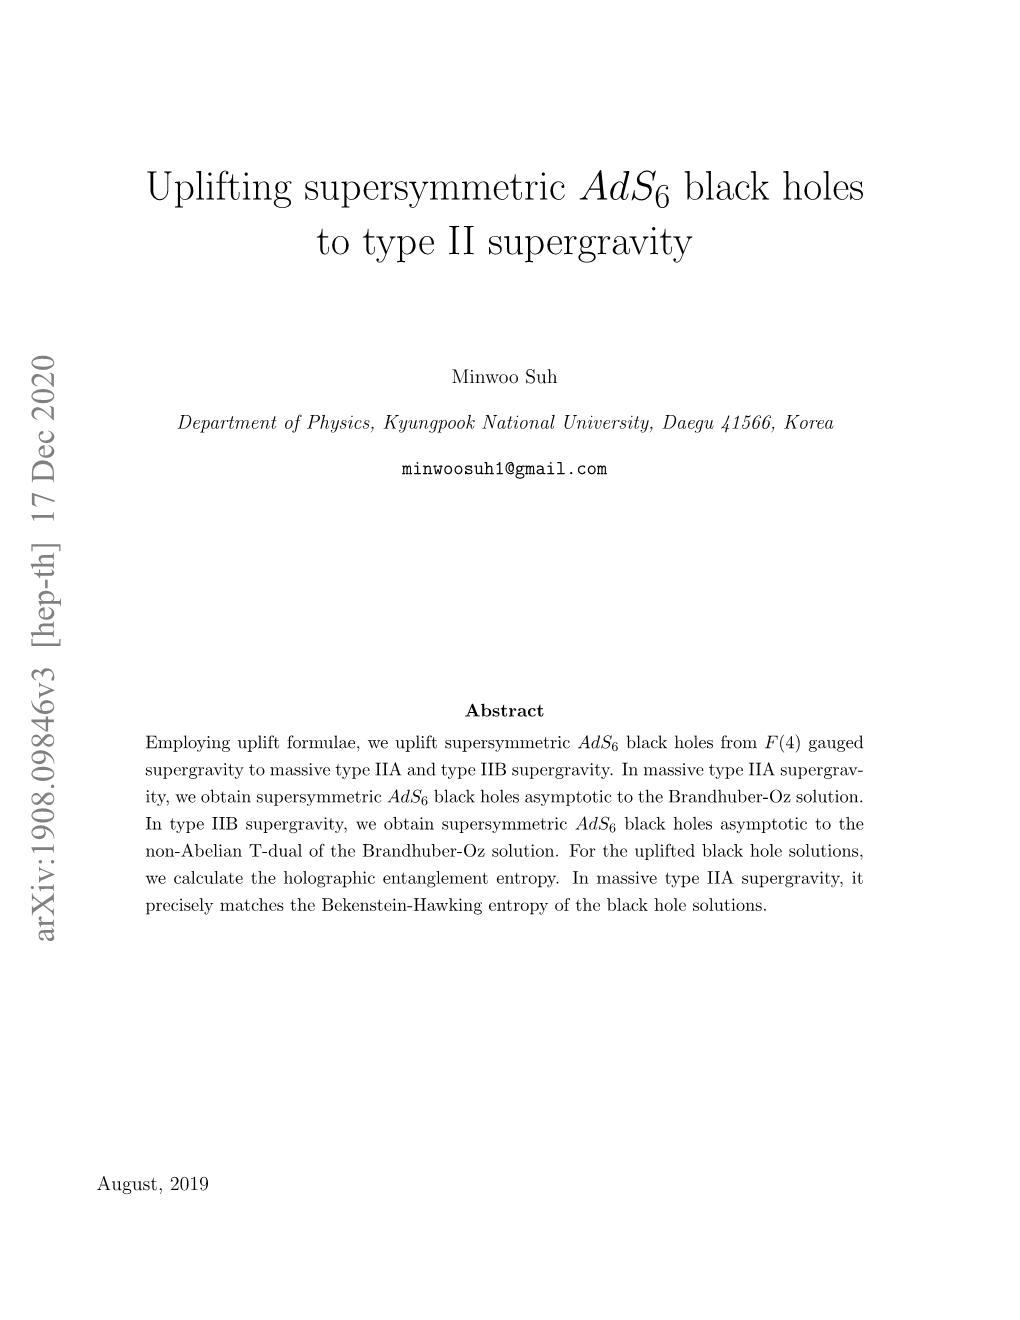 Uplifting Supersymmetric Ads6 Black Holes to Type II Supergravity